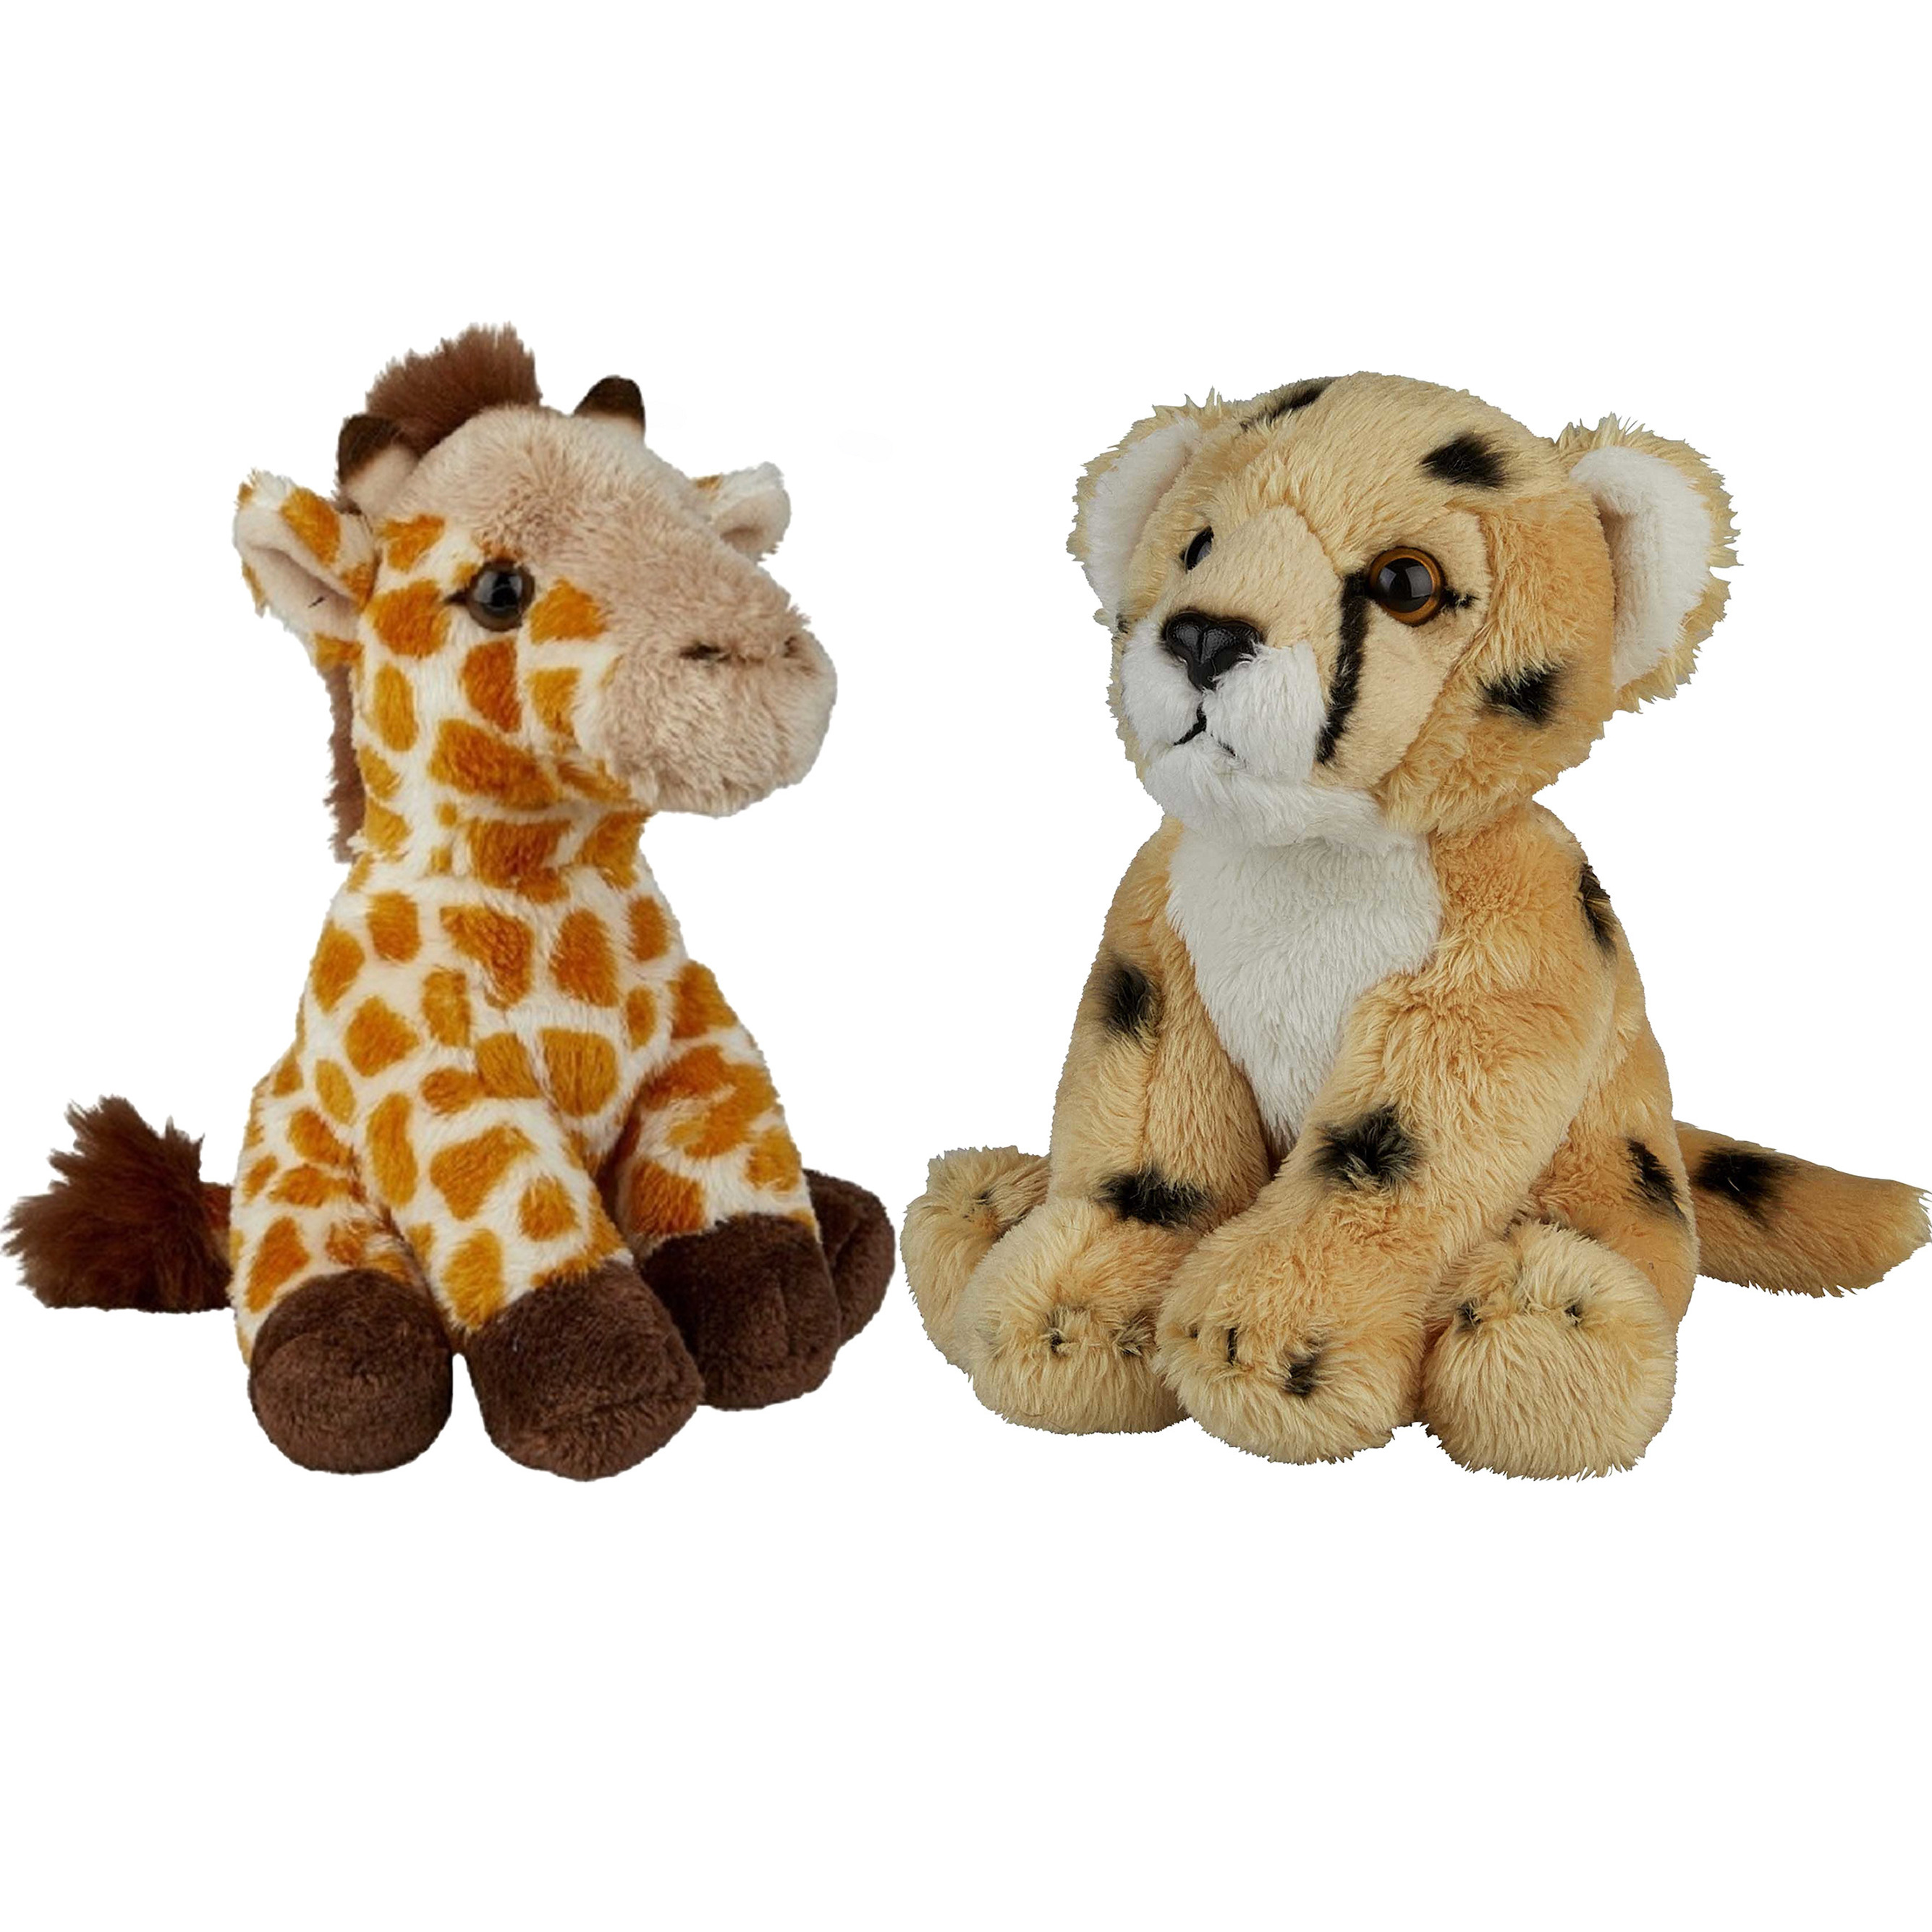 Safari dieren serie pluche knuffels 2x stuks Cheetah en Giraffe van 15 cm